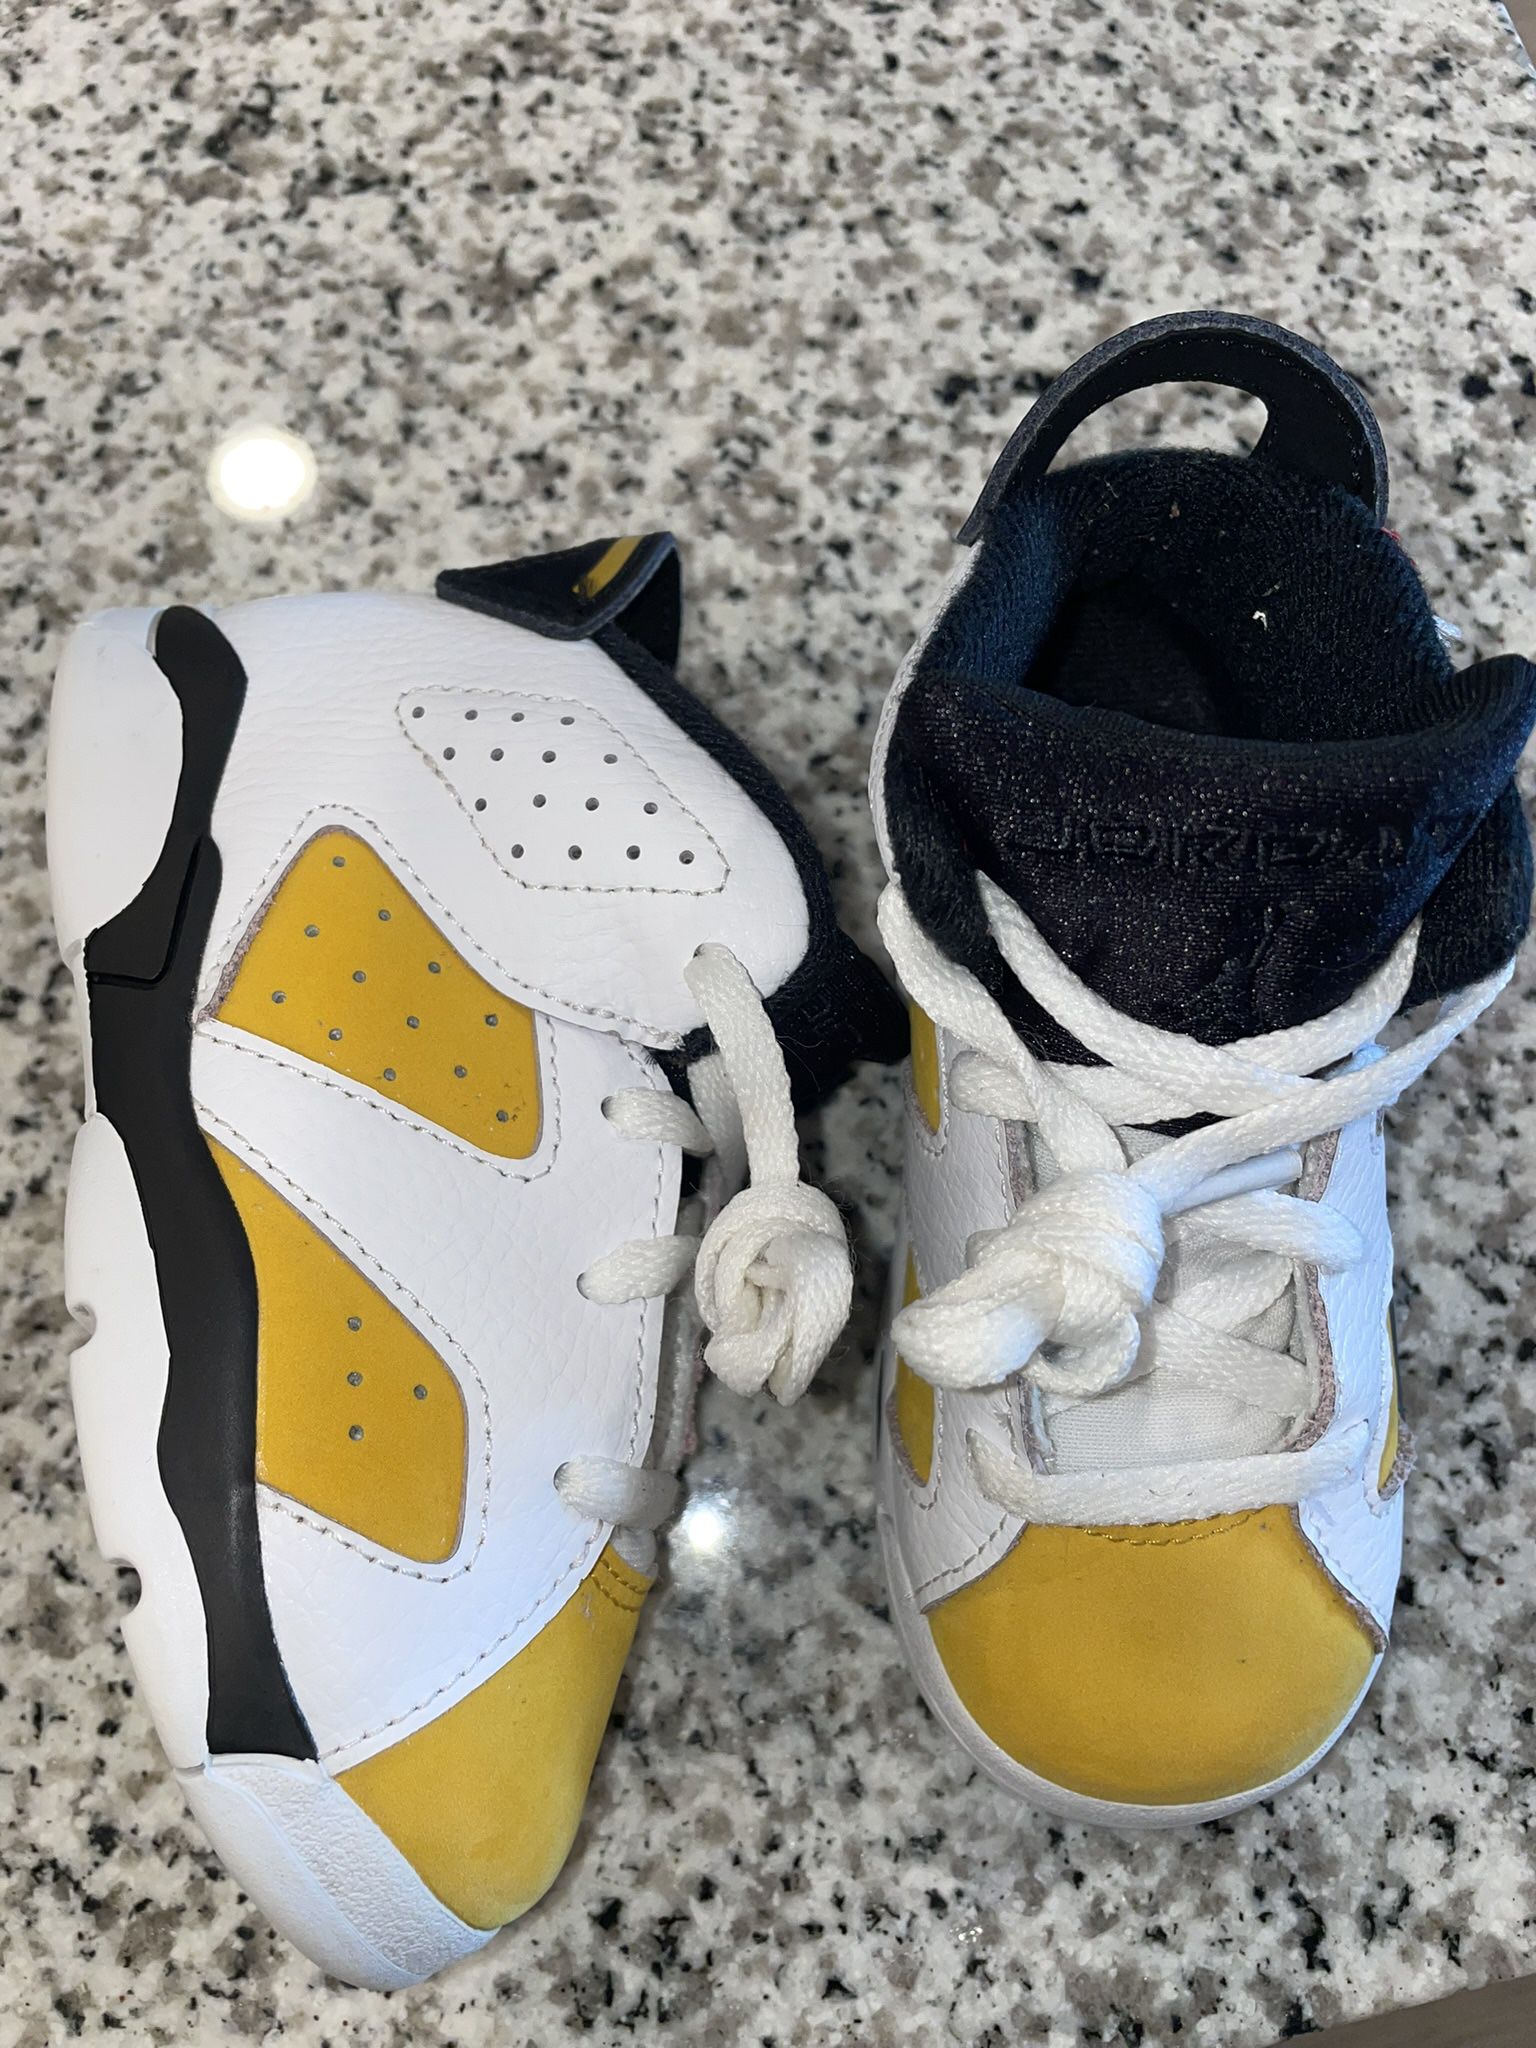 Jordan’s Kids Used-Like New Shoes